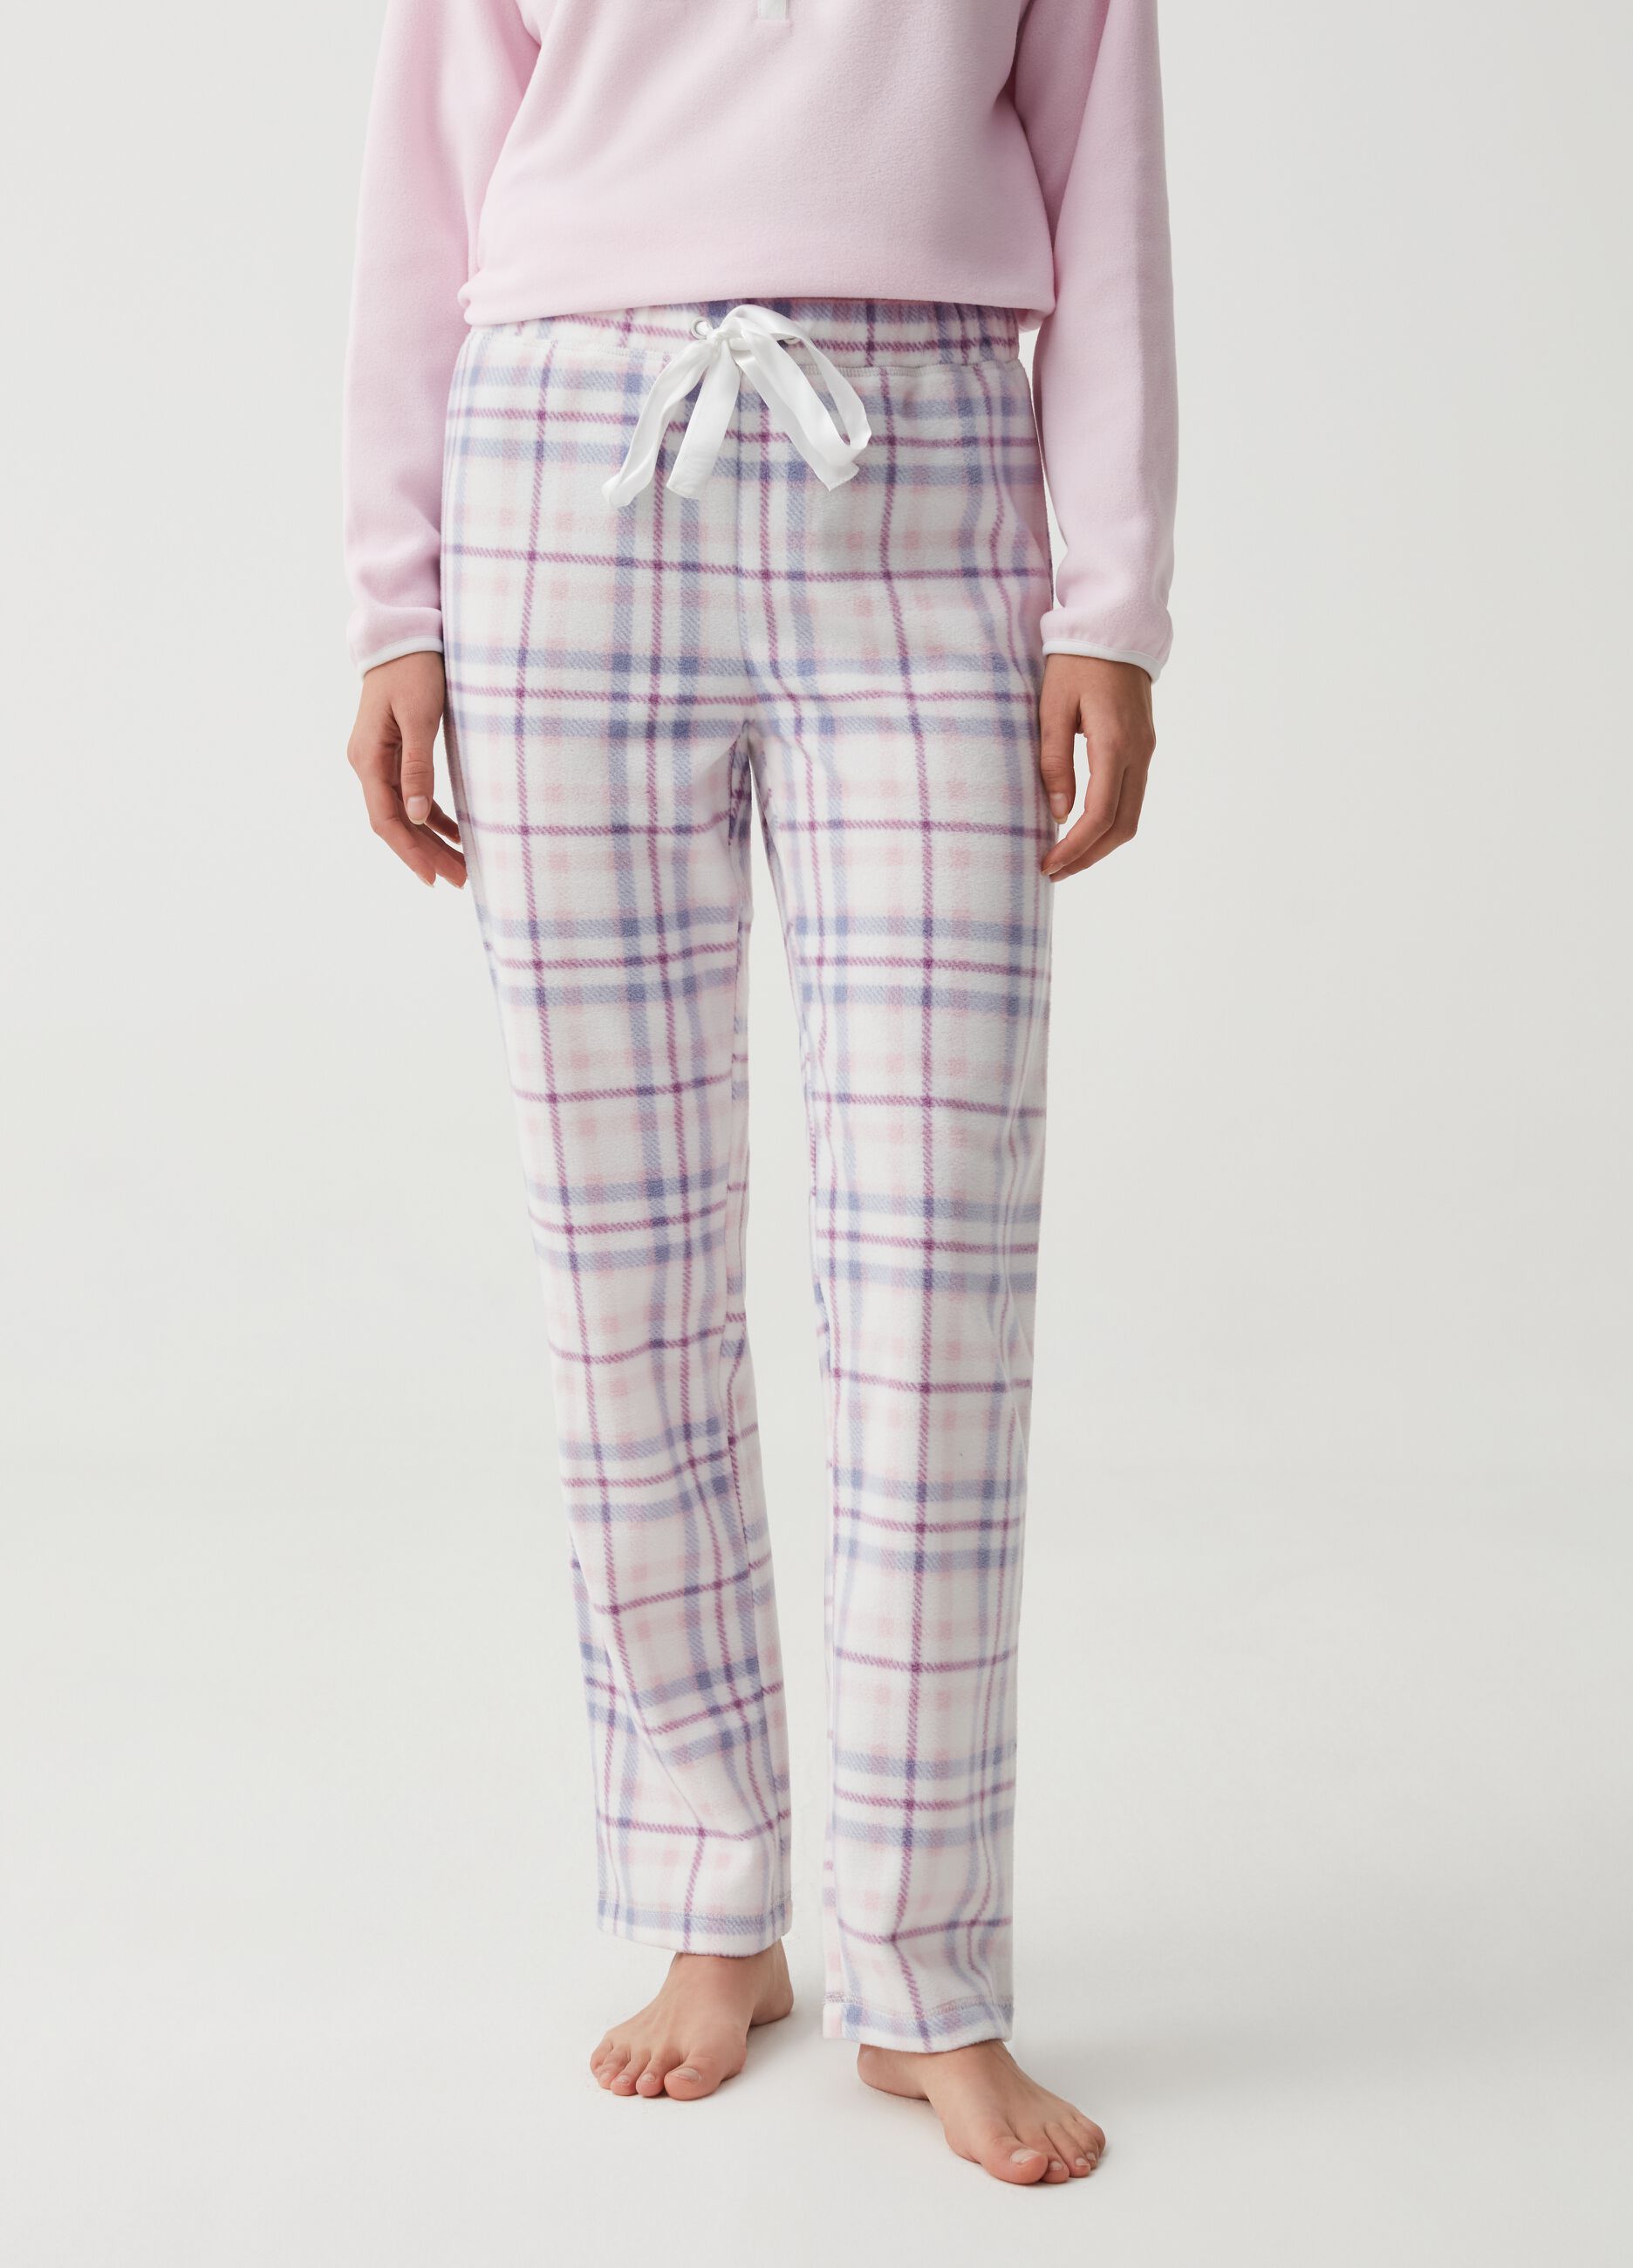 Pantalón pijama de tejido polar estampado cuadros